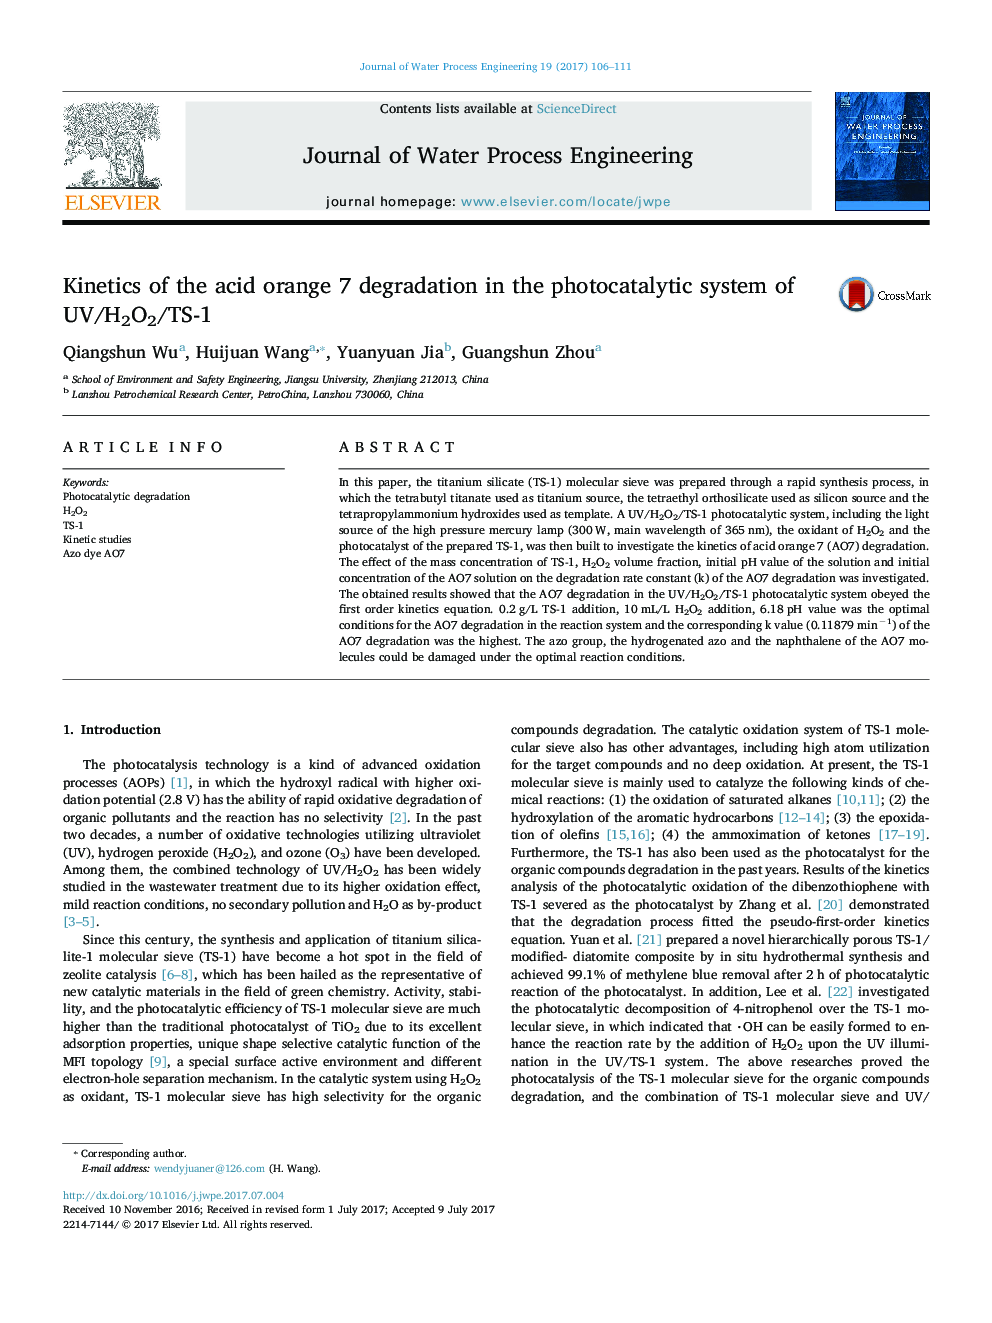 Kinetics of the acid orange 7 degradation in the photocatalytic system of UV/H2O2/TS-1